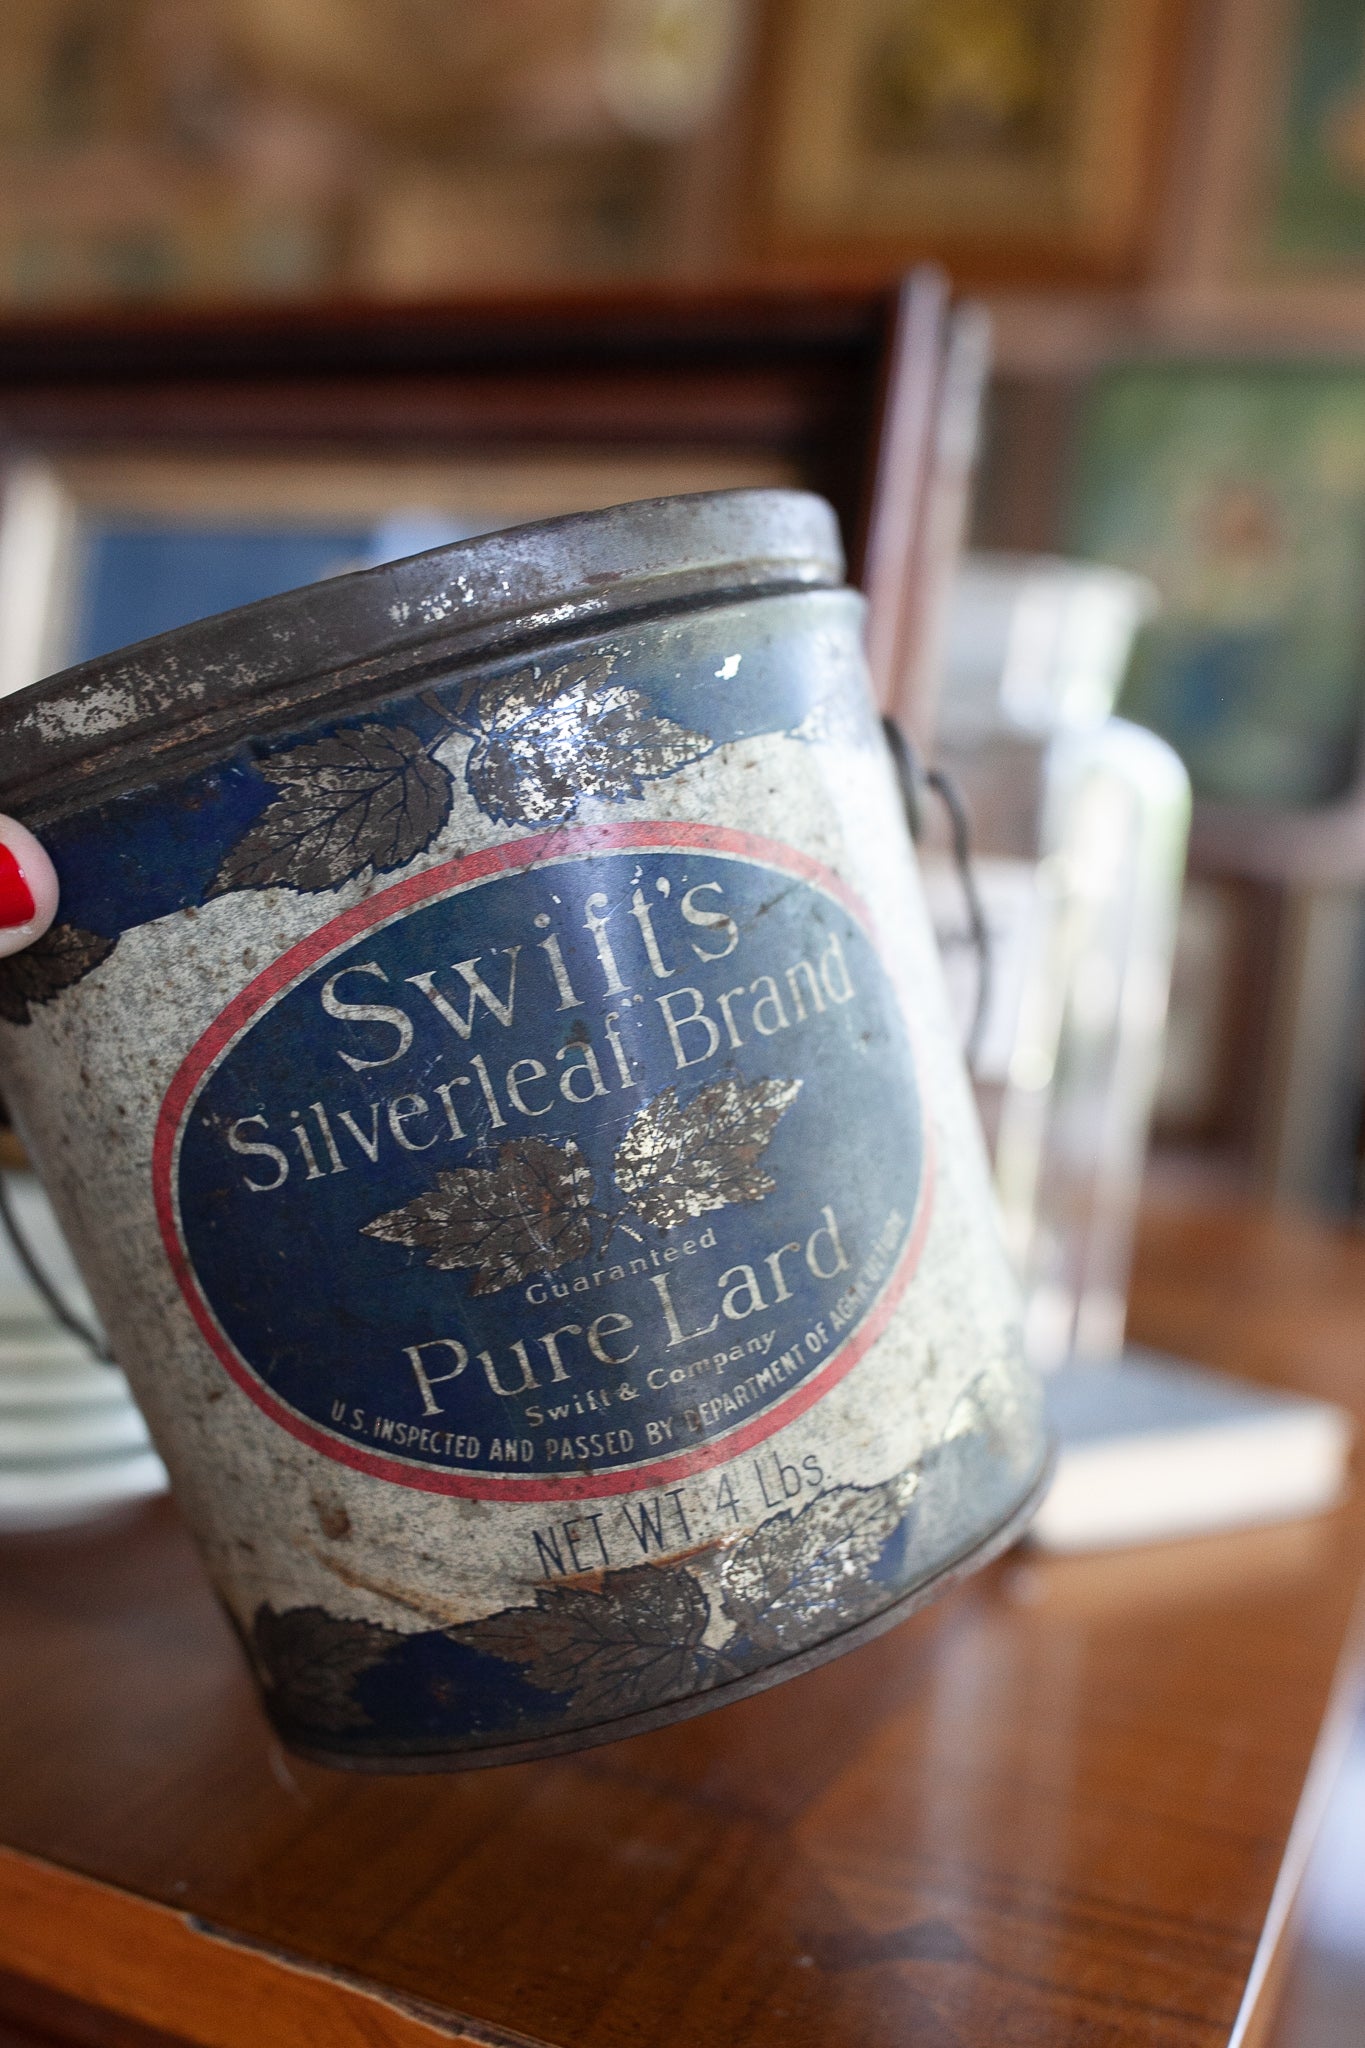 Vintage Tin - Swift's Silverleaf Brand Pure Lard - Red White and Blue Tin